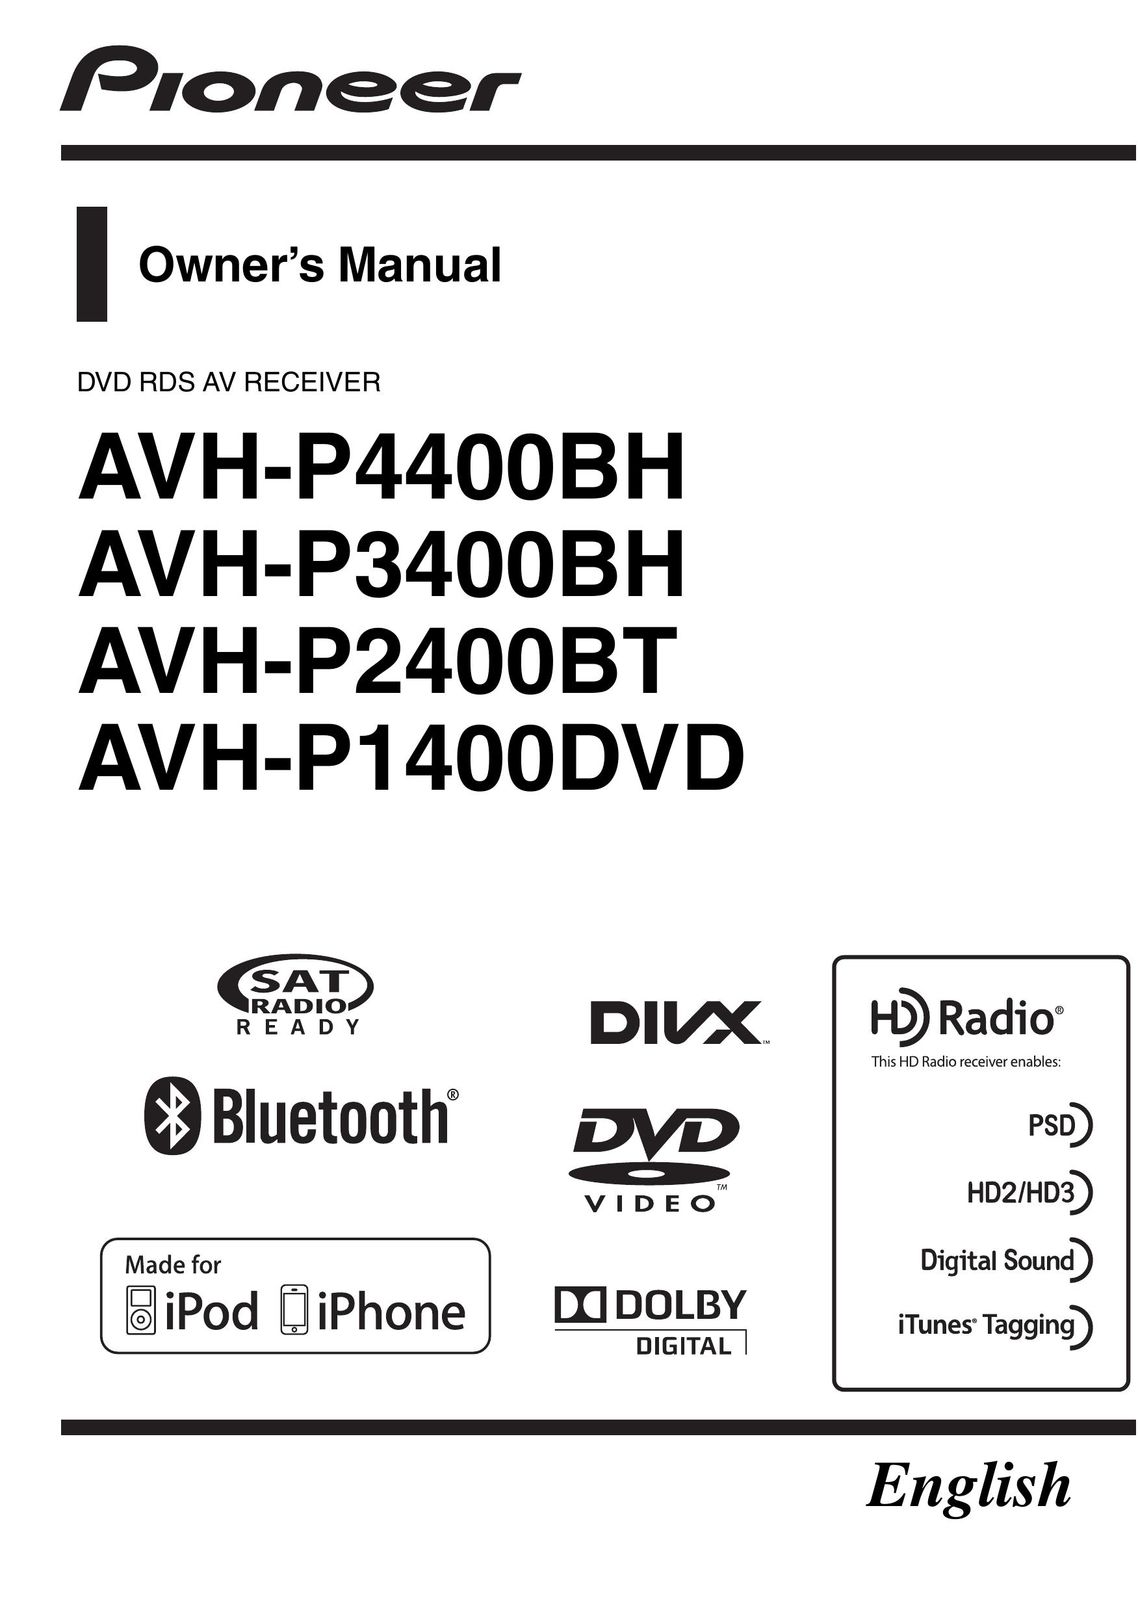 Pioneer AVH-P2400BT Car Video System User Manual